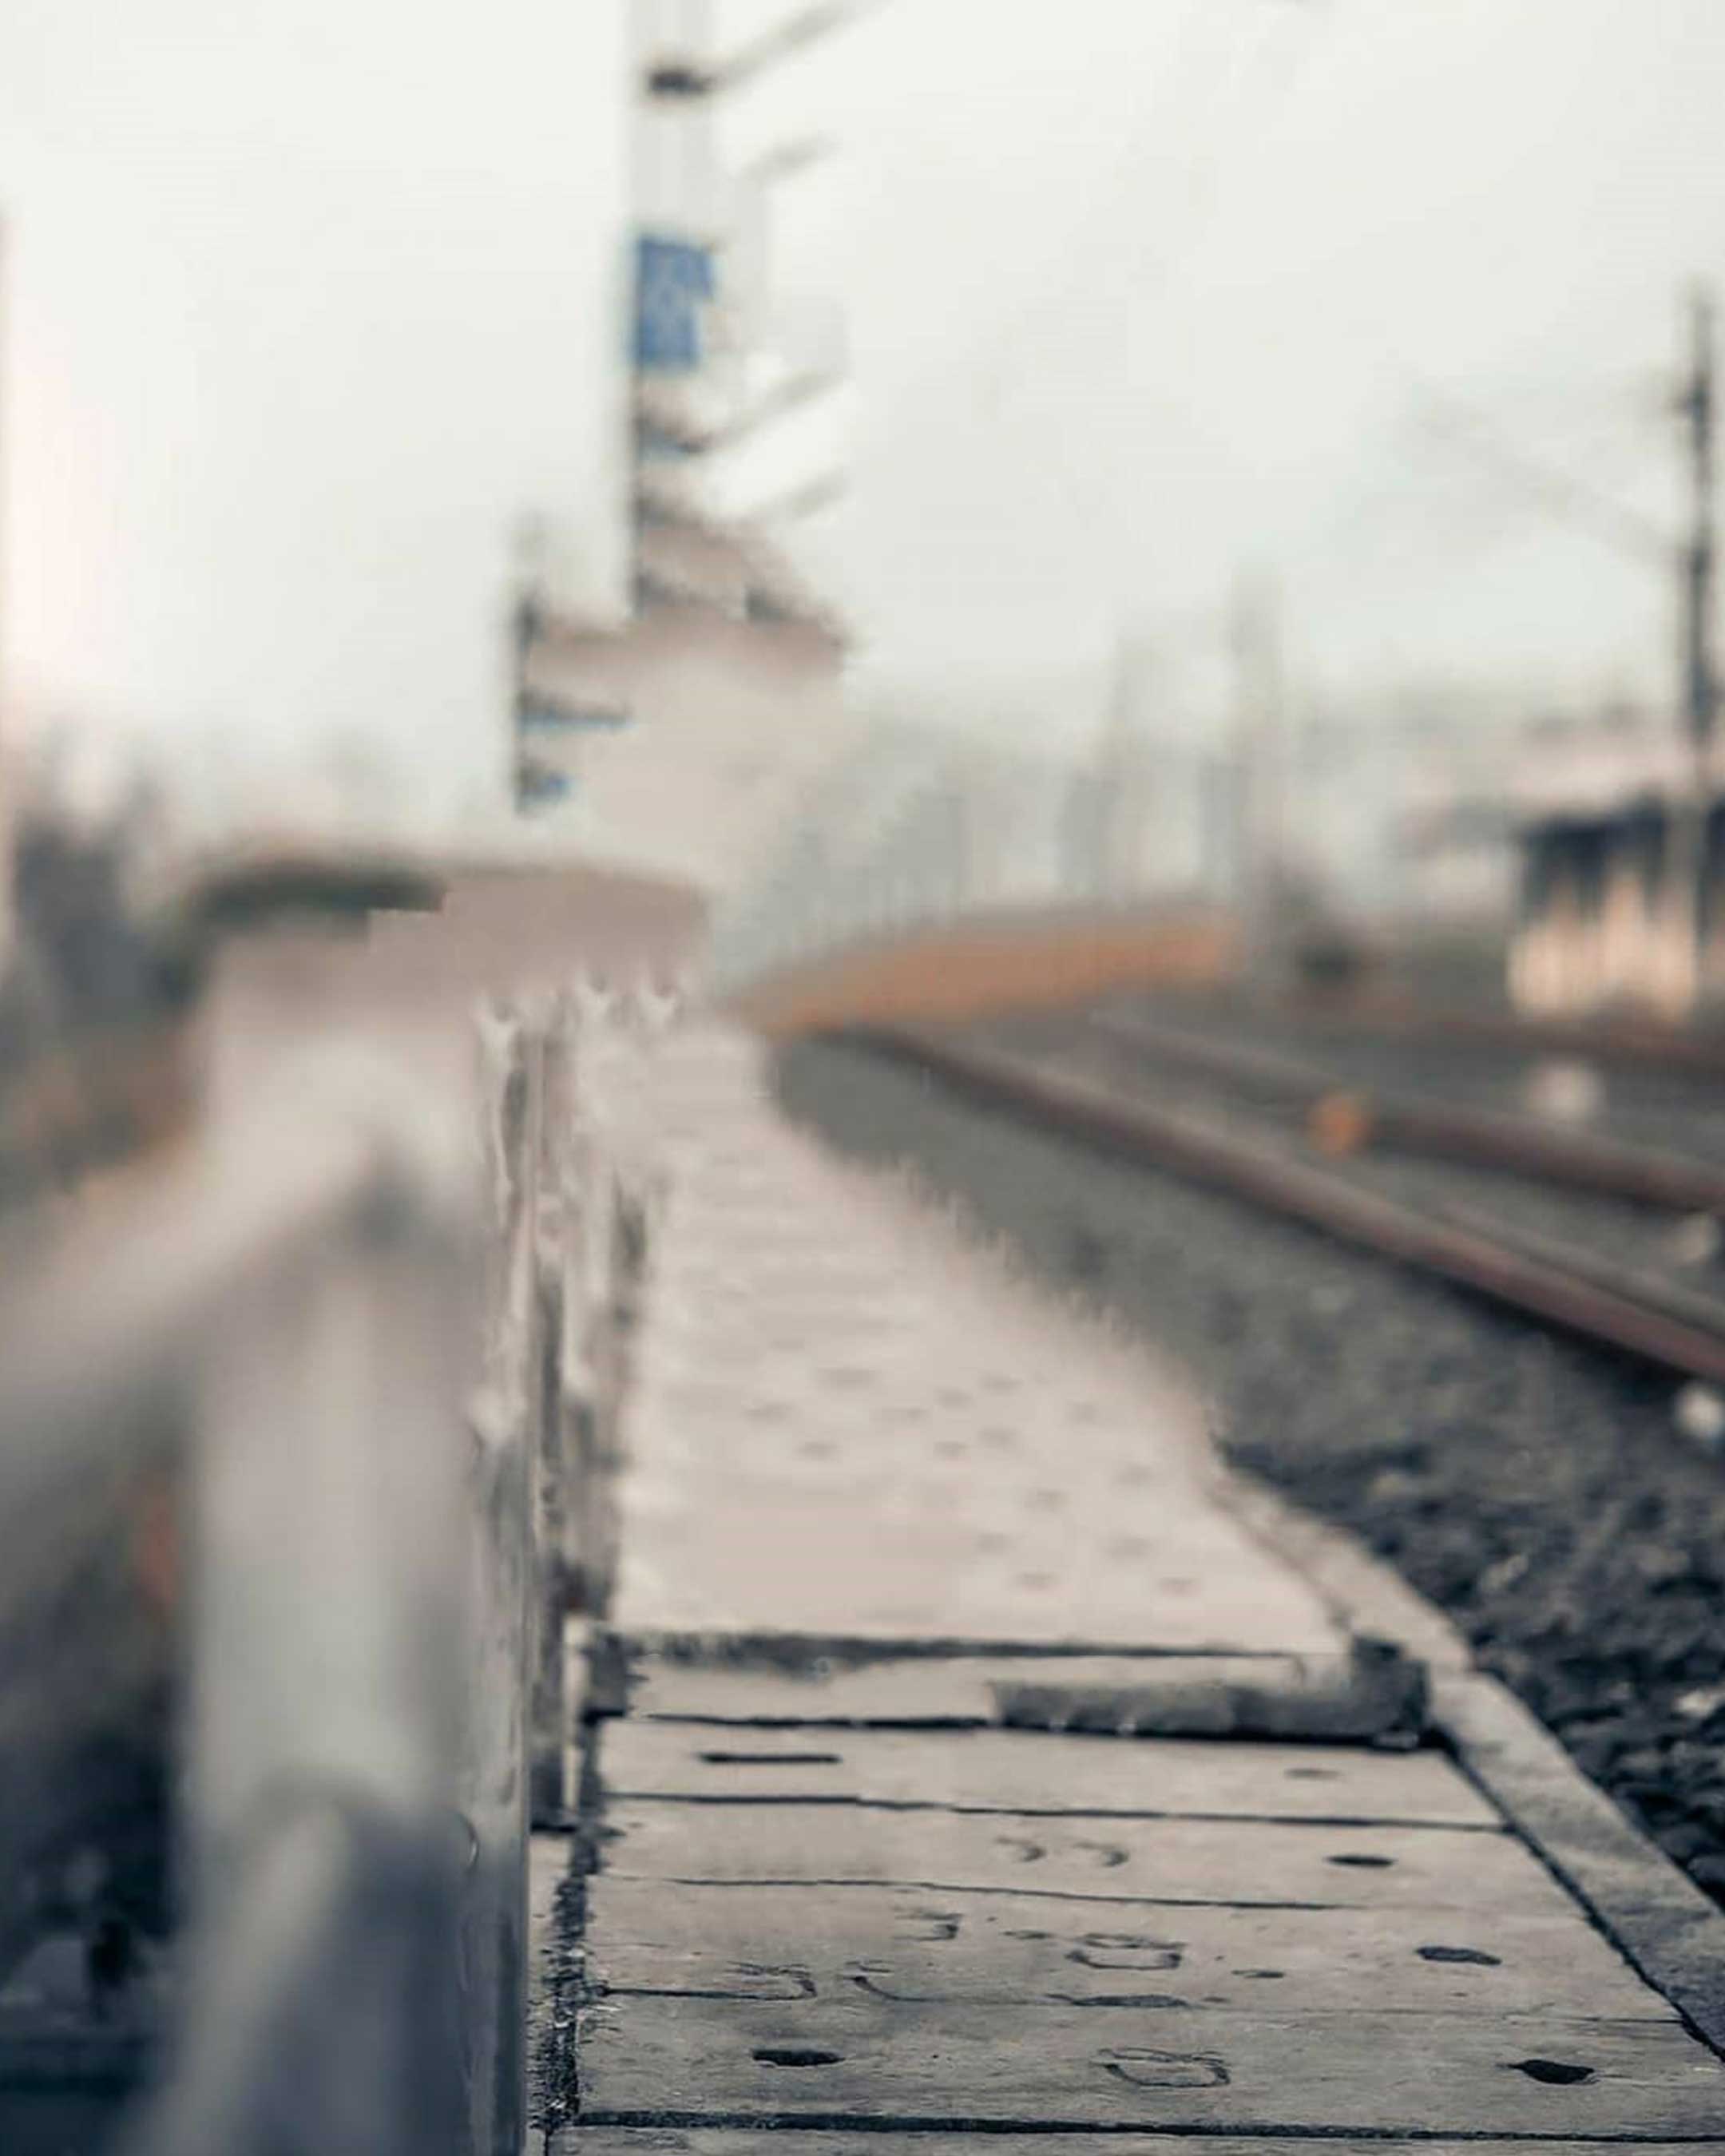 Railway Station Blur PicsArt Background Free Stock Image